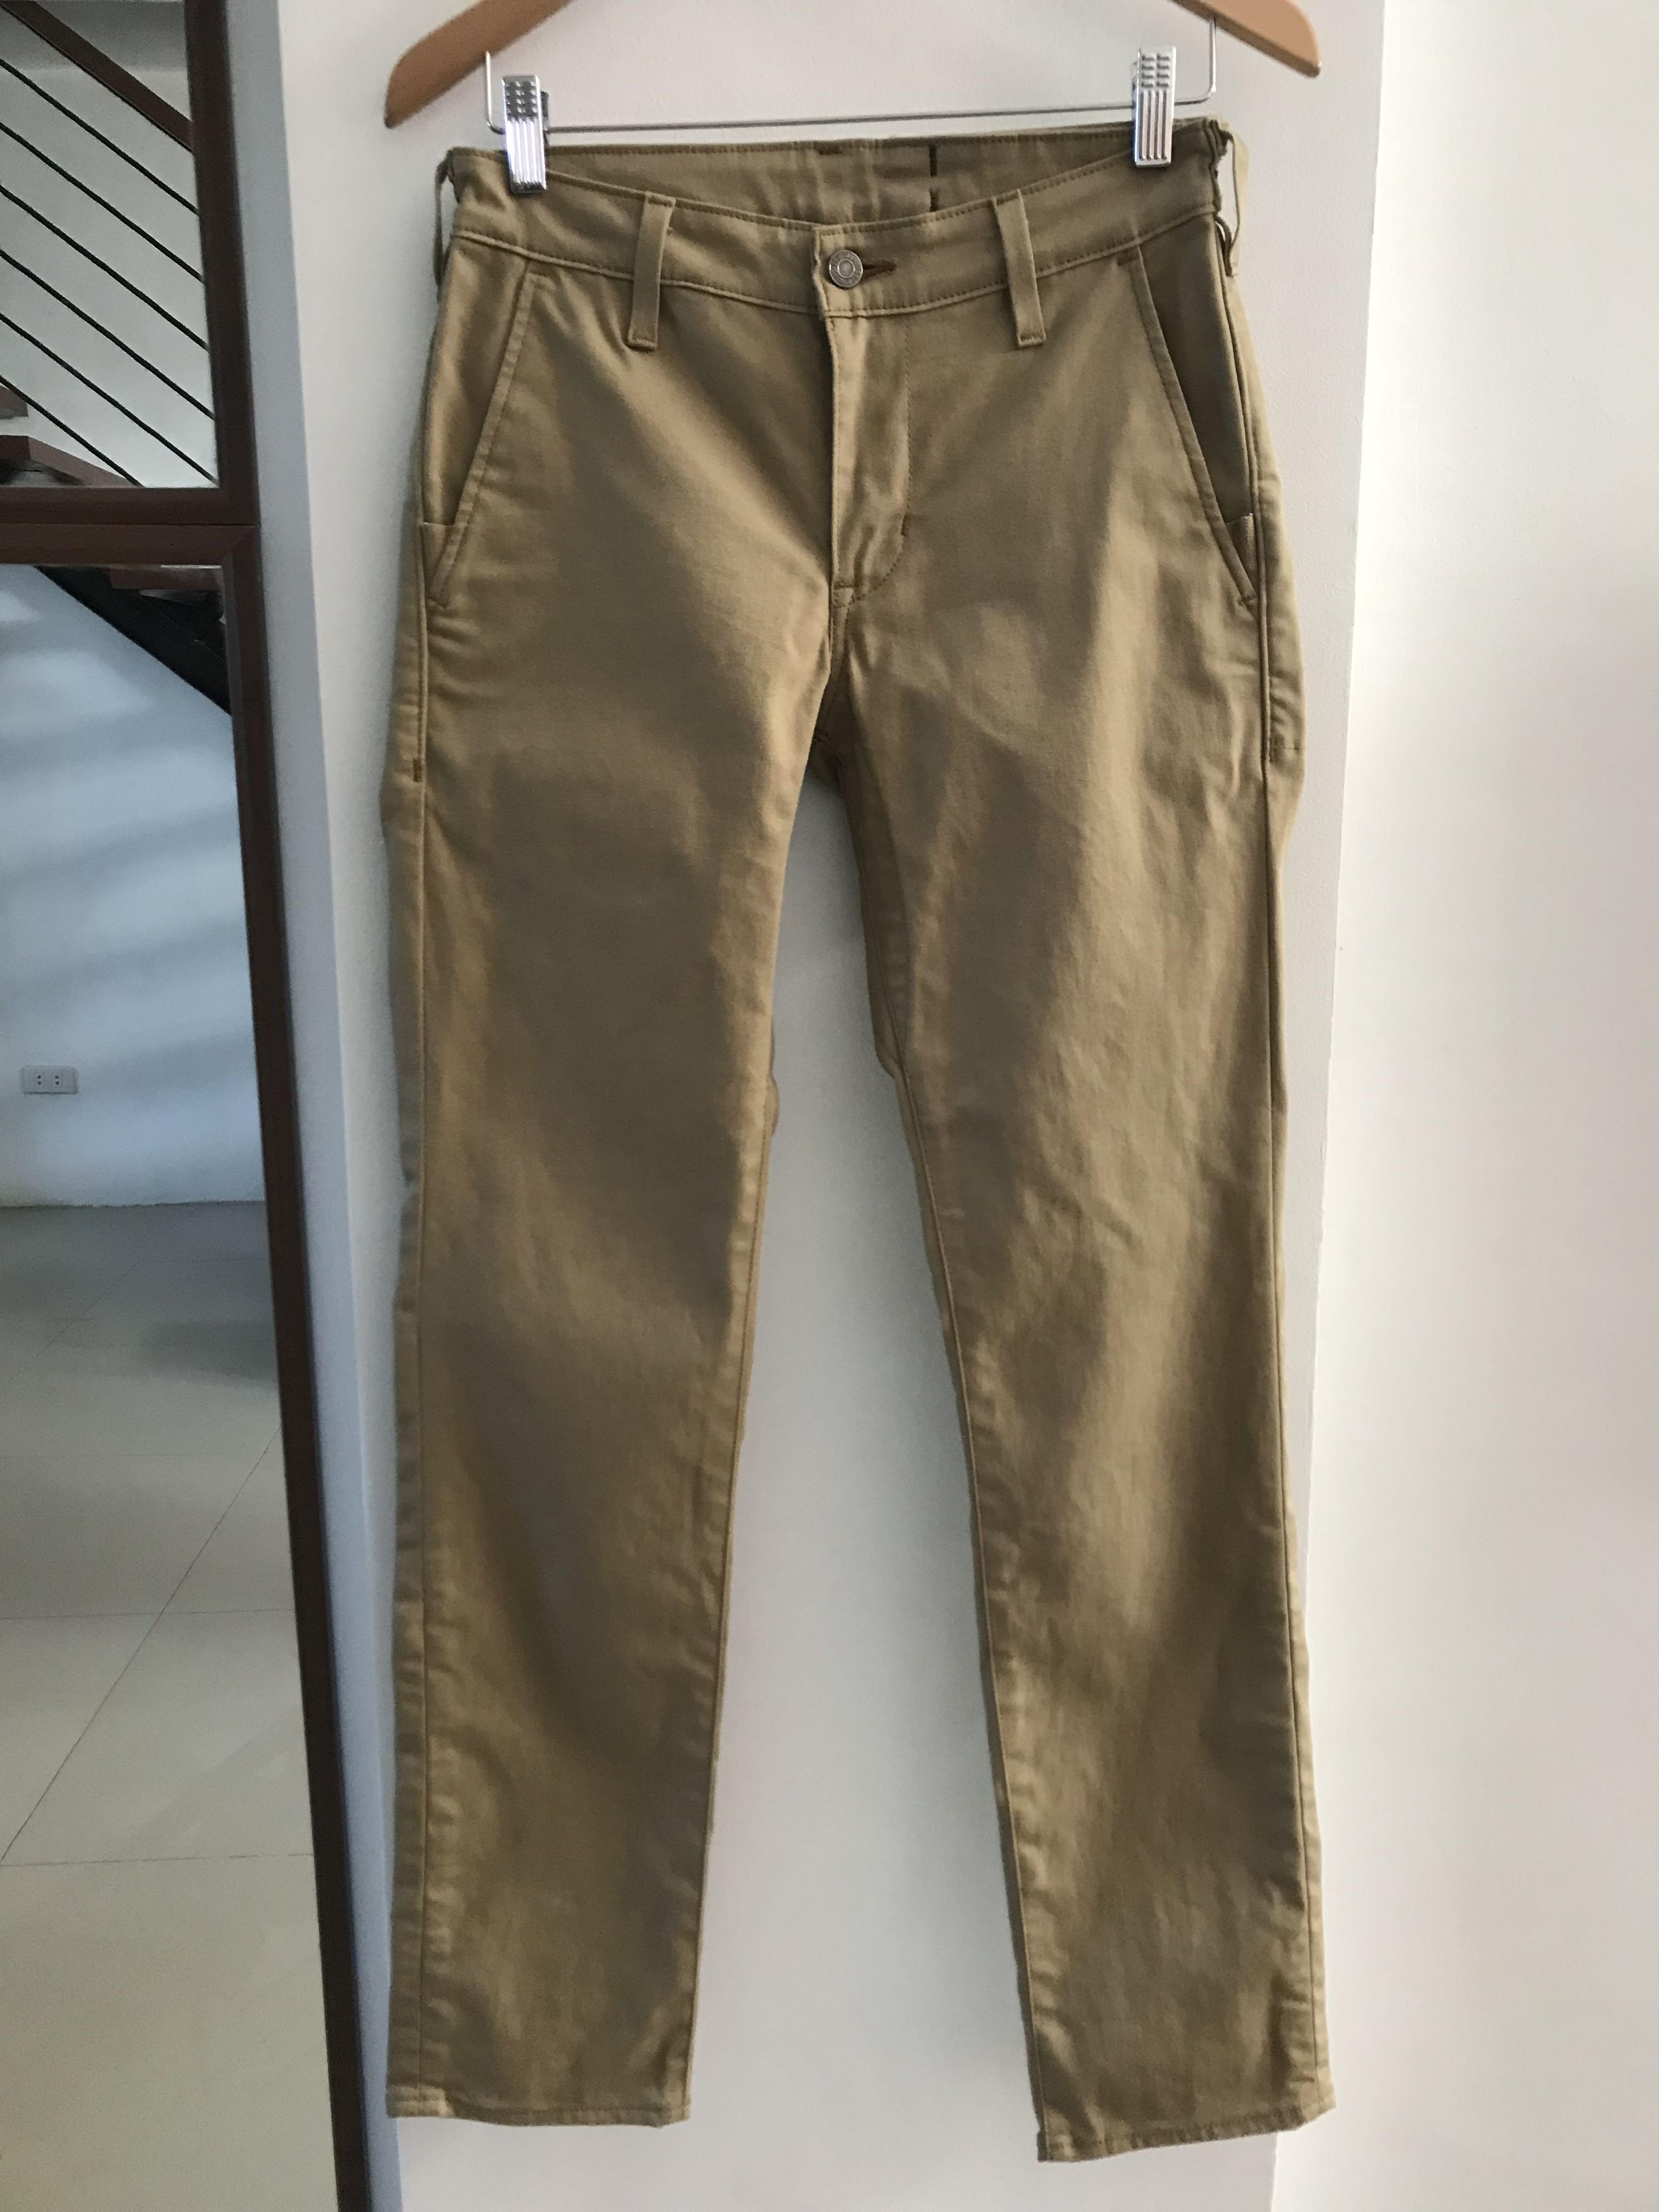 Levis 511 Slim Fit Commuter Trousers Pants 3M Reflective Stretch Grey Beige  | eBay